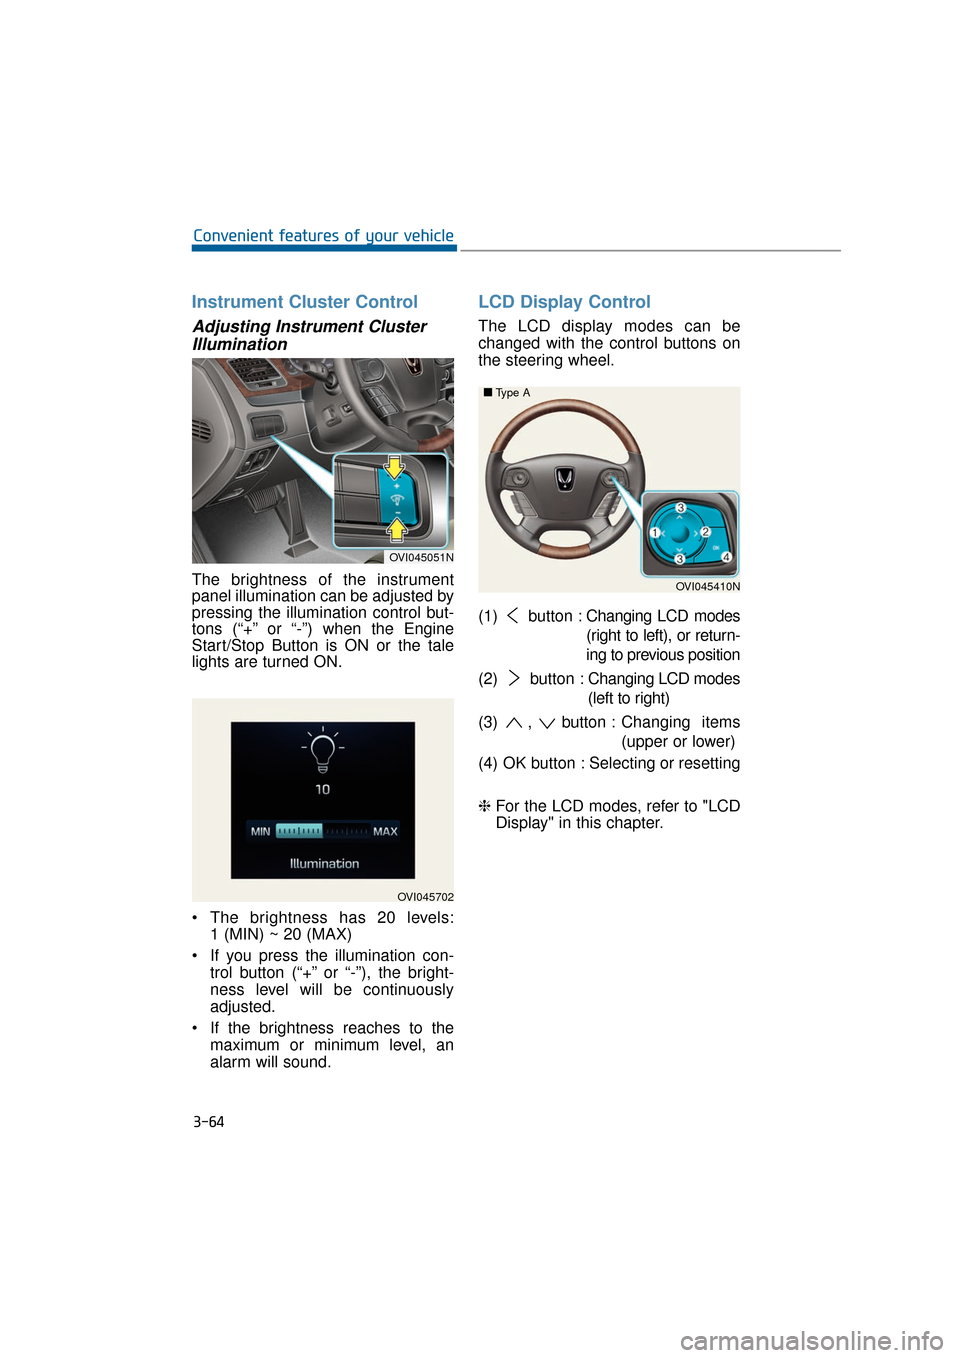 Hyundai Equus 2016 User Guide Instrument Cluster Control
Adjusting Instrument ClusterIllumination
The brightness of the instrument
panel illumination can be adjusted by
pressing the illumination control but-
tons (“+” or “-�